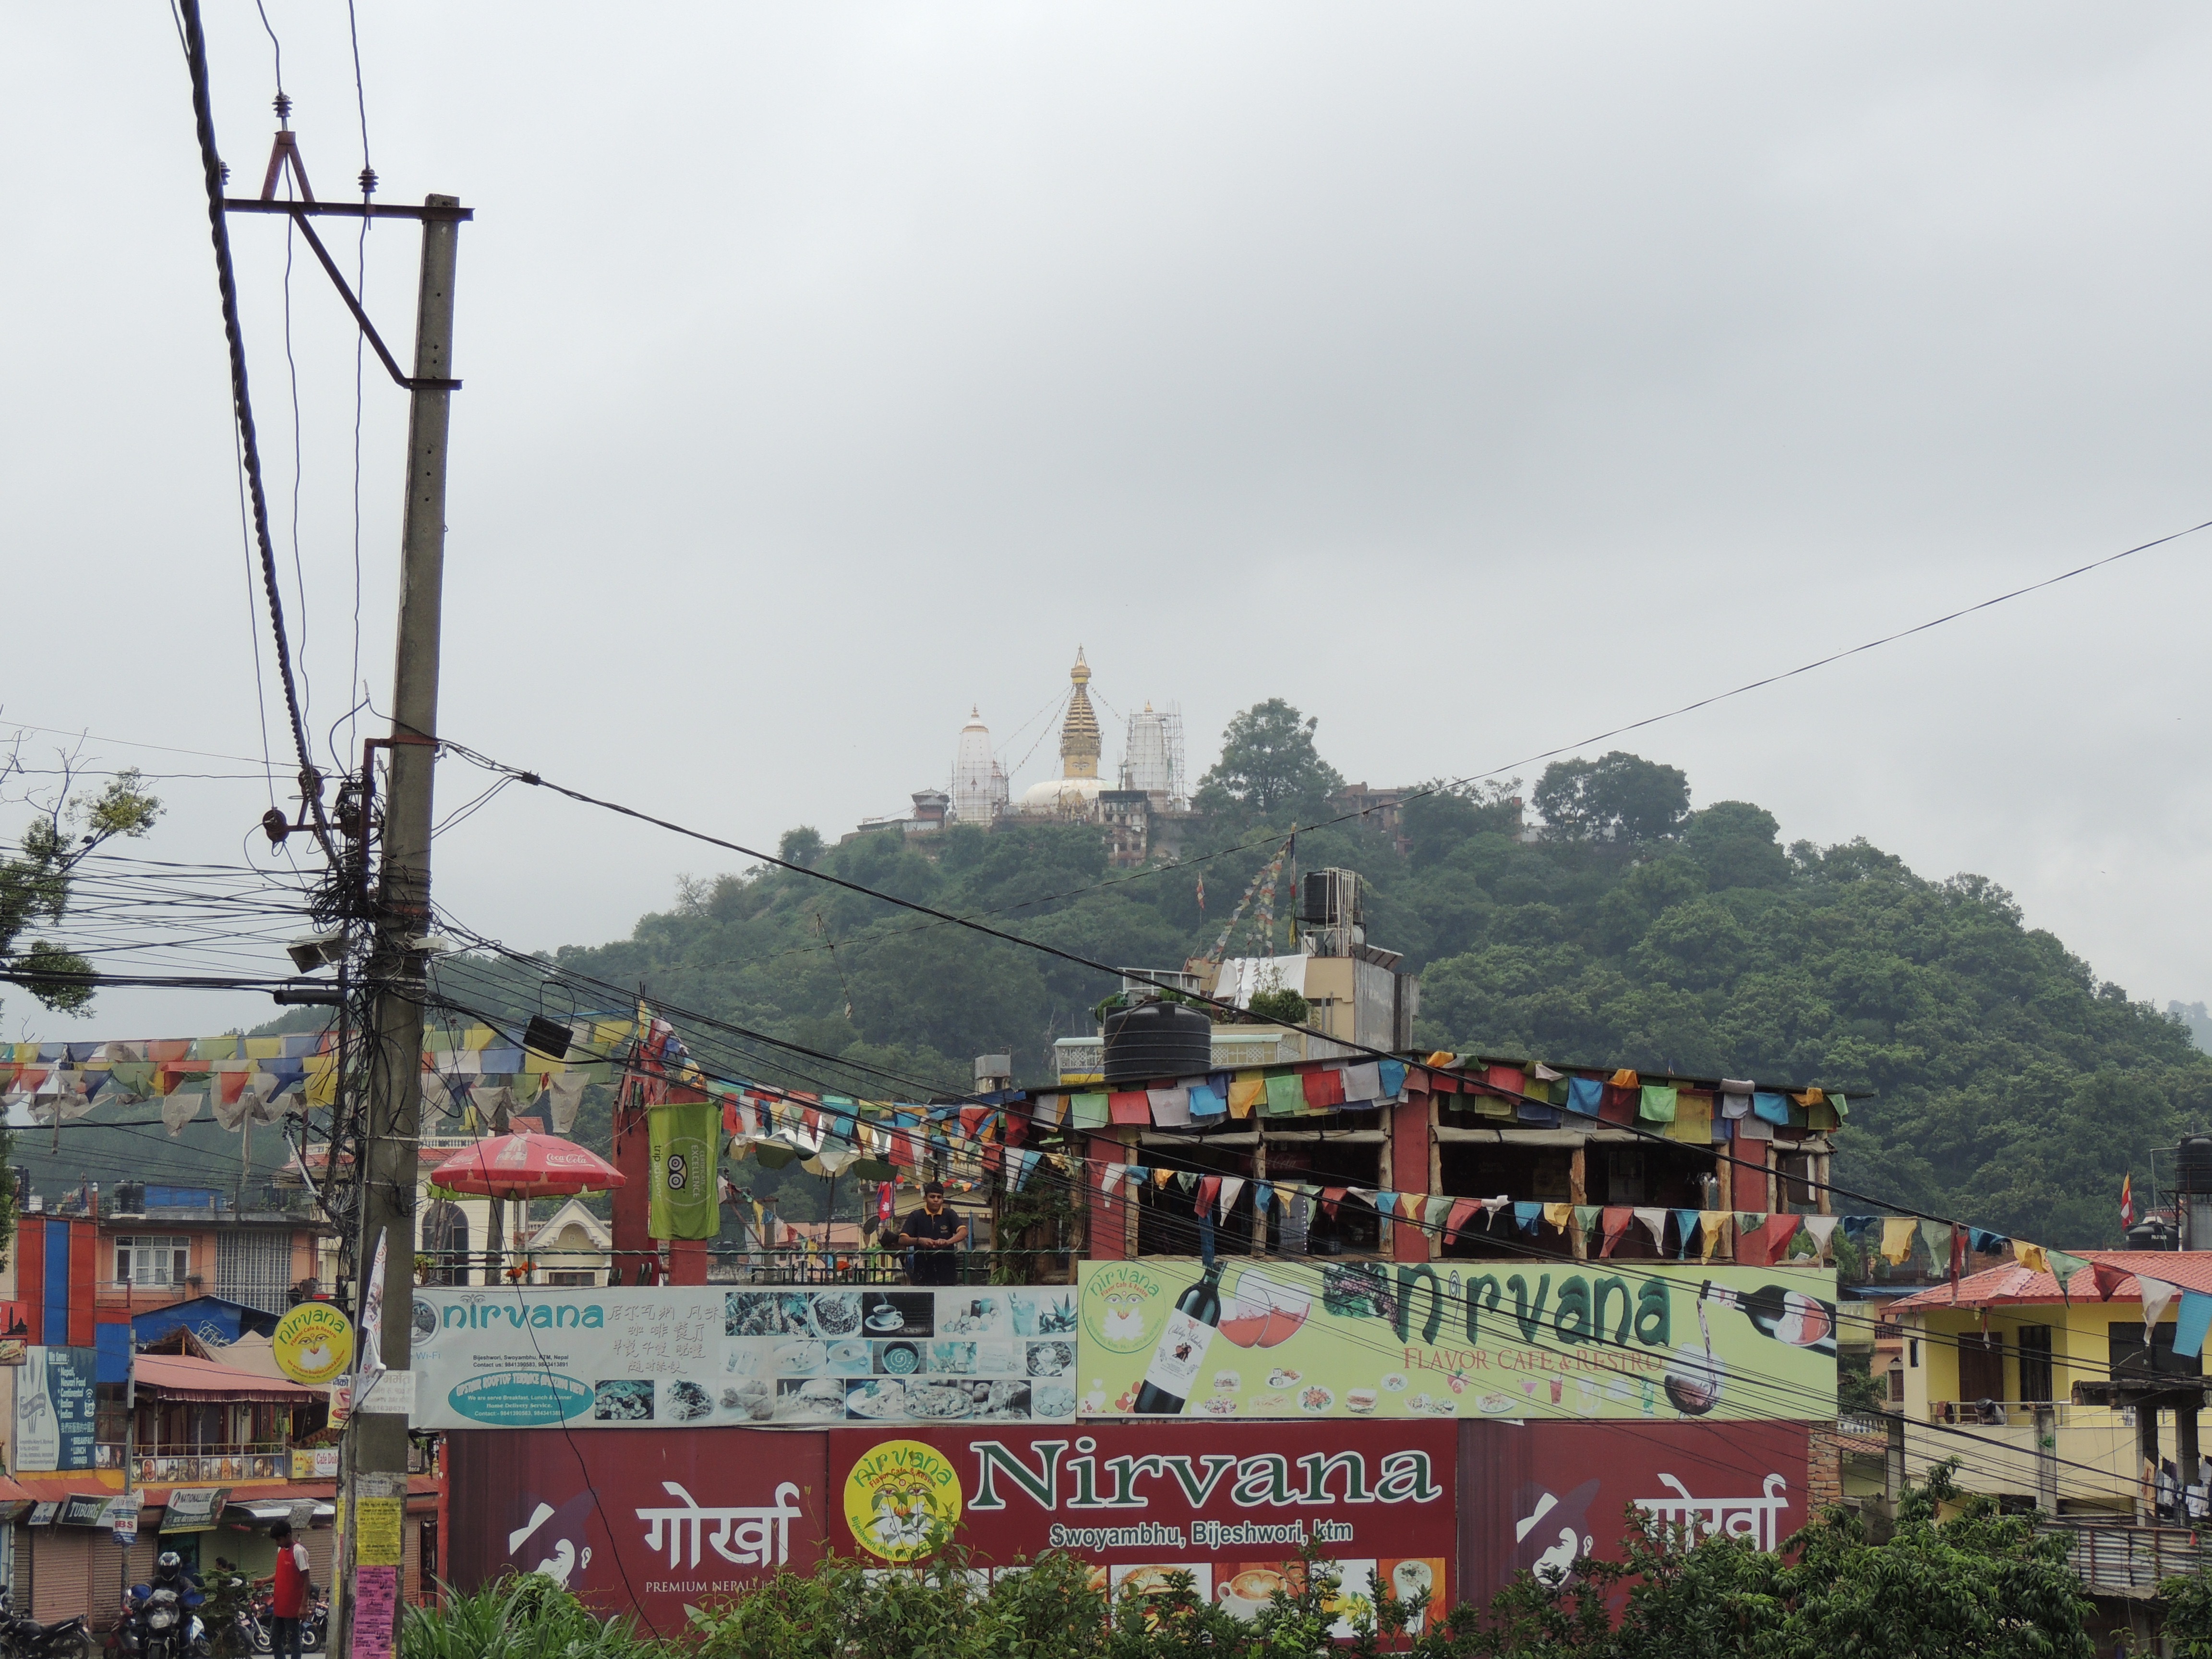 Swayambhu nath in the distance